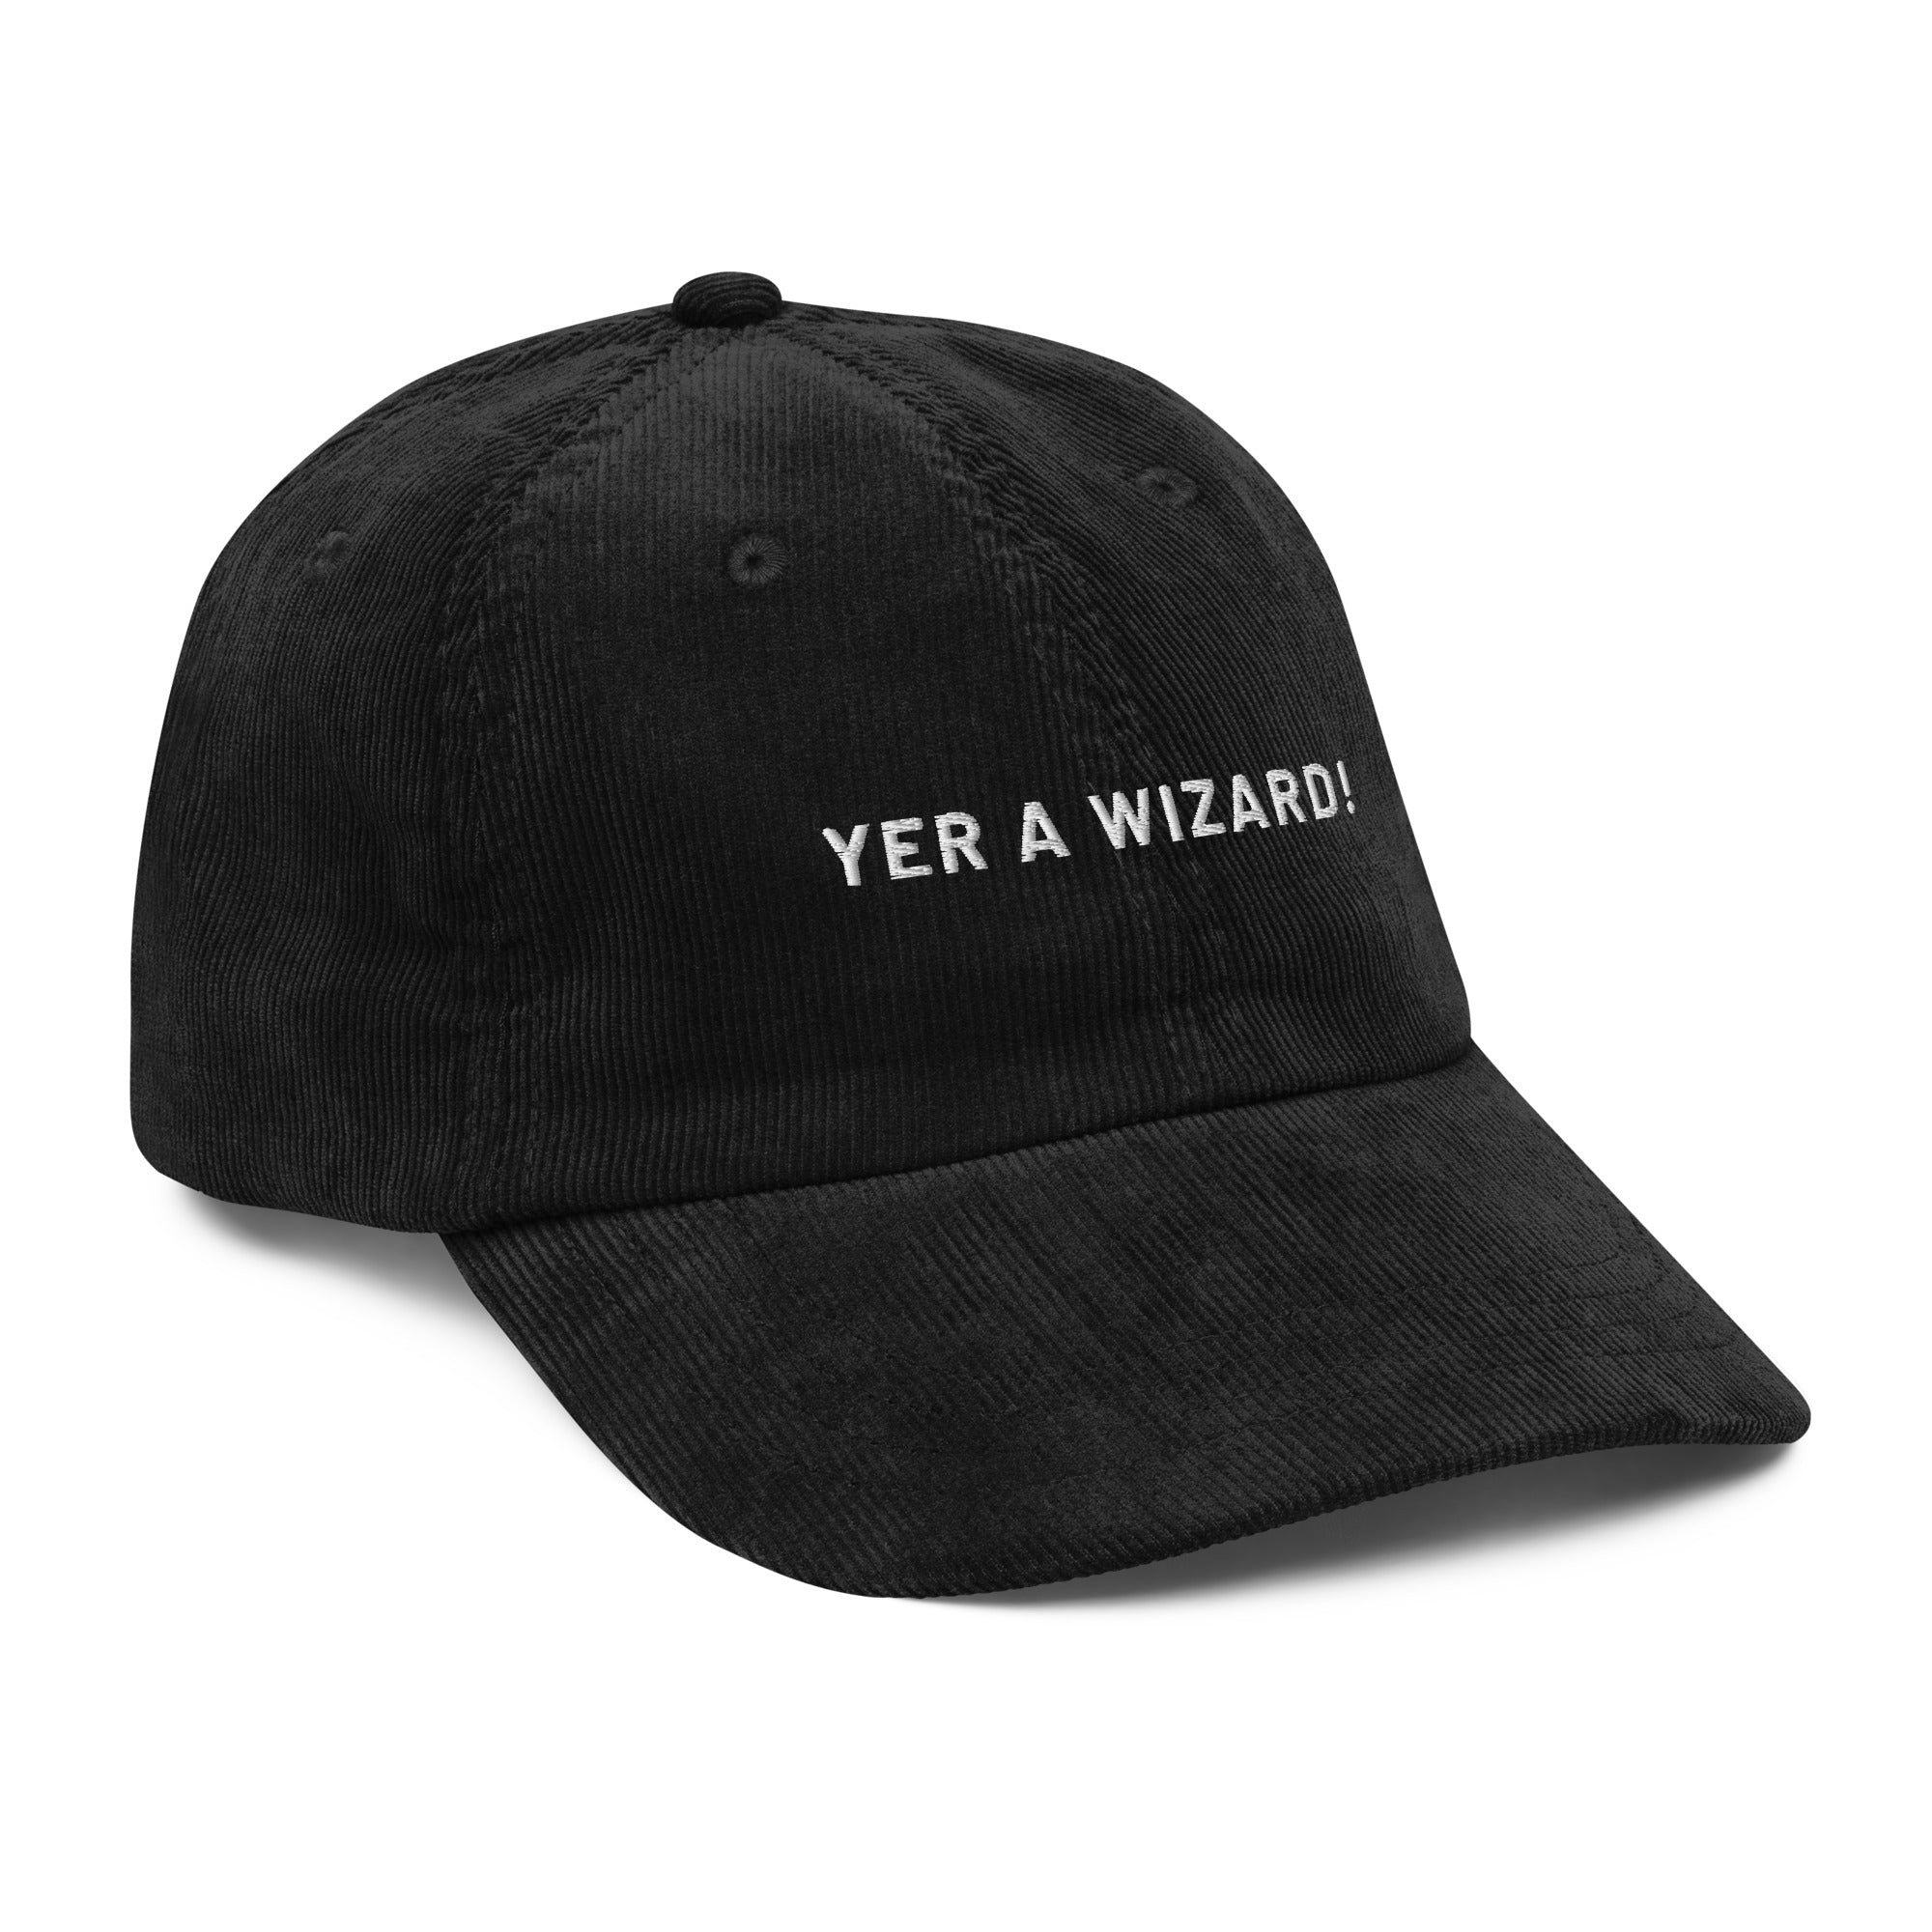 Yer a wizard!